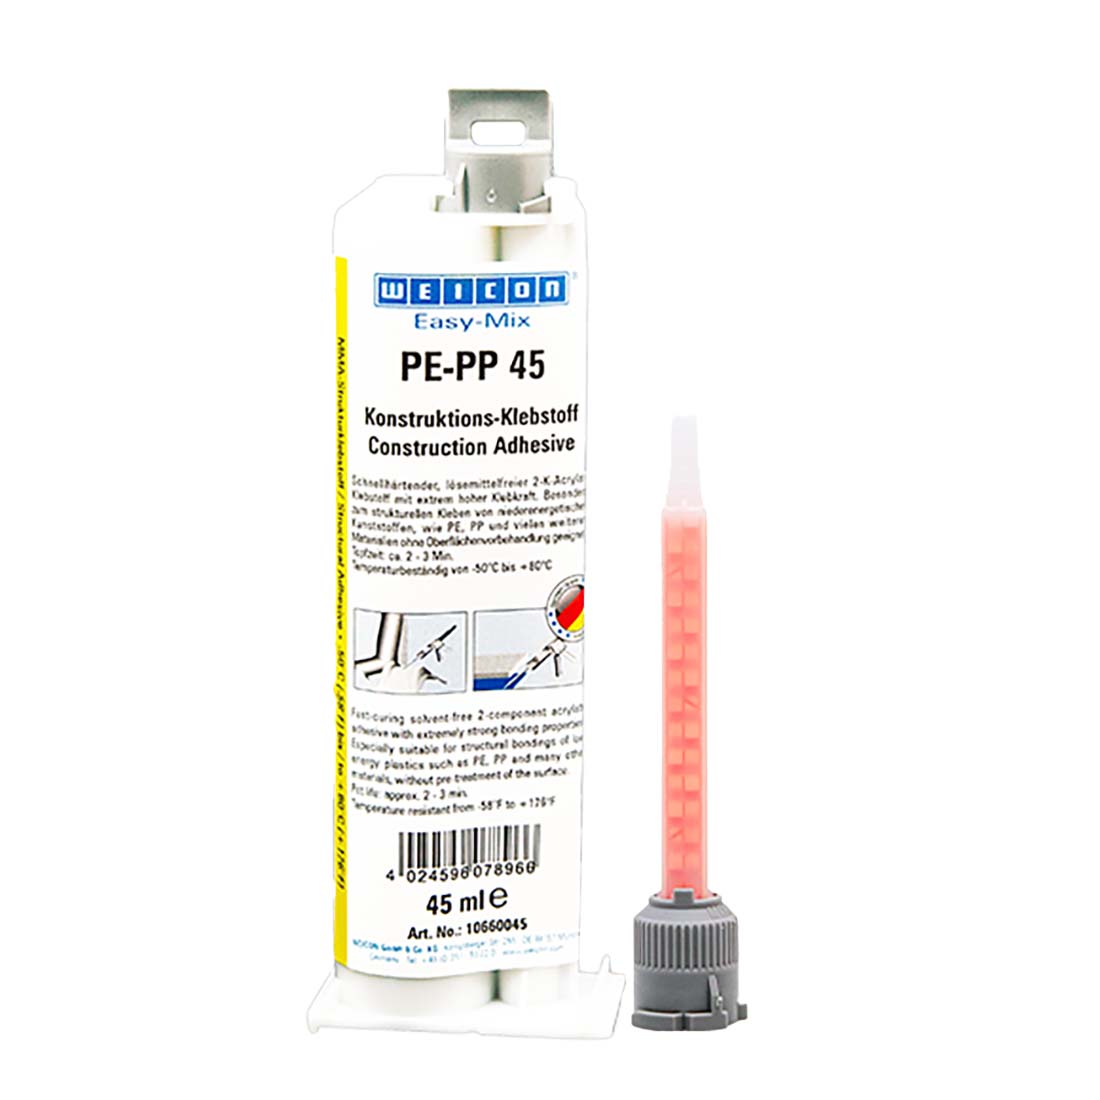 Easy-Mix PE-PP Polyethylene and Polypropylene Adhesive, 45ml - 10660045